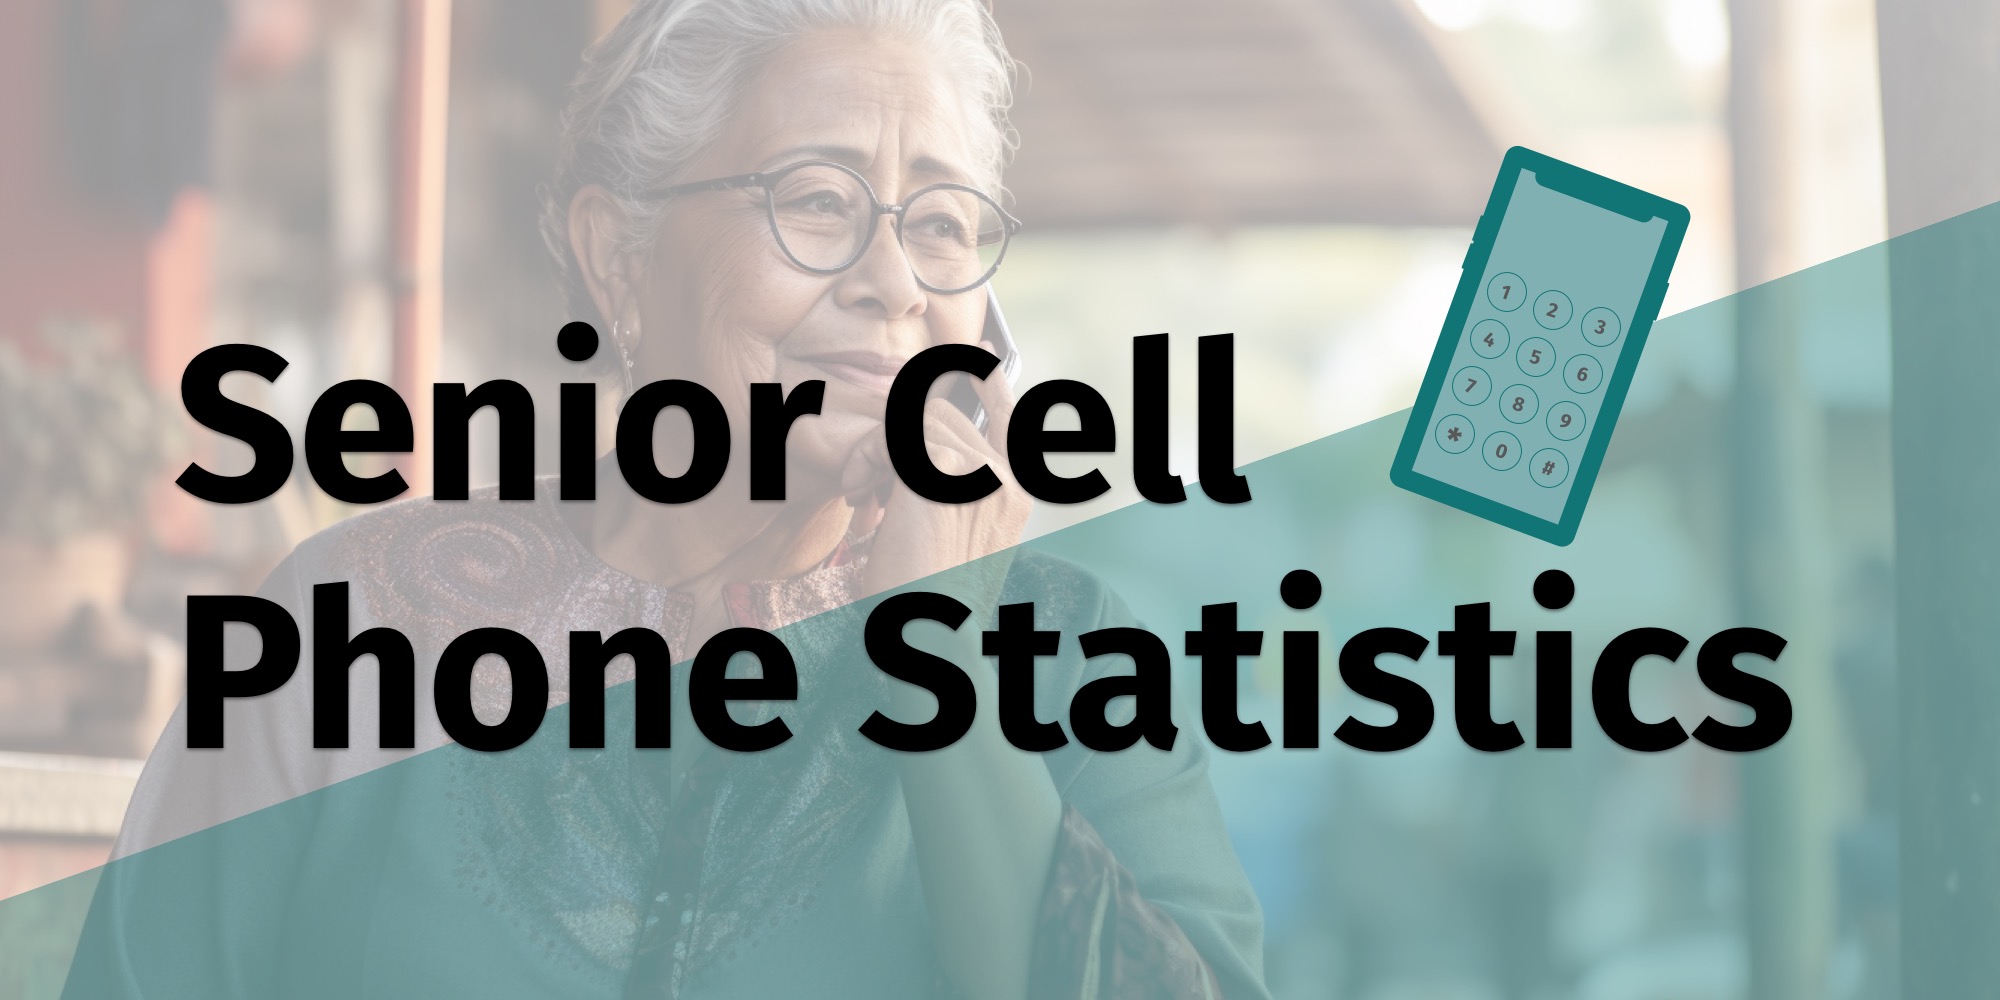 Cell Phones For Seniors Statistics